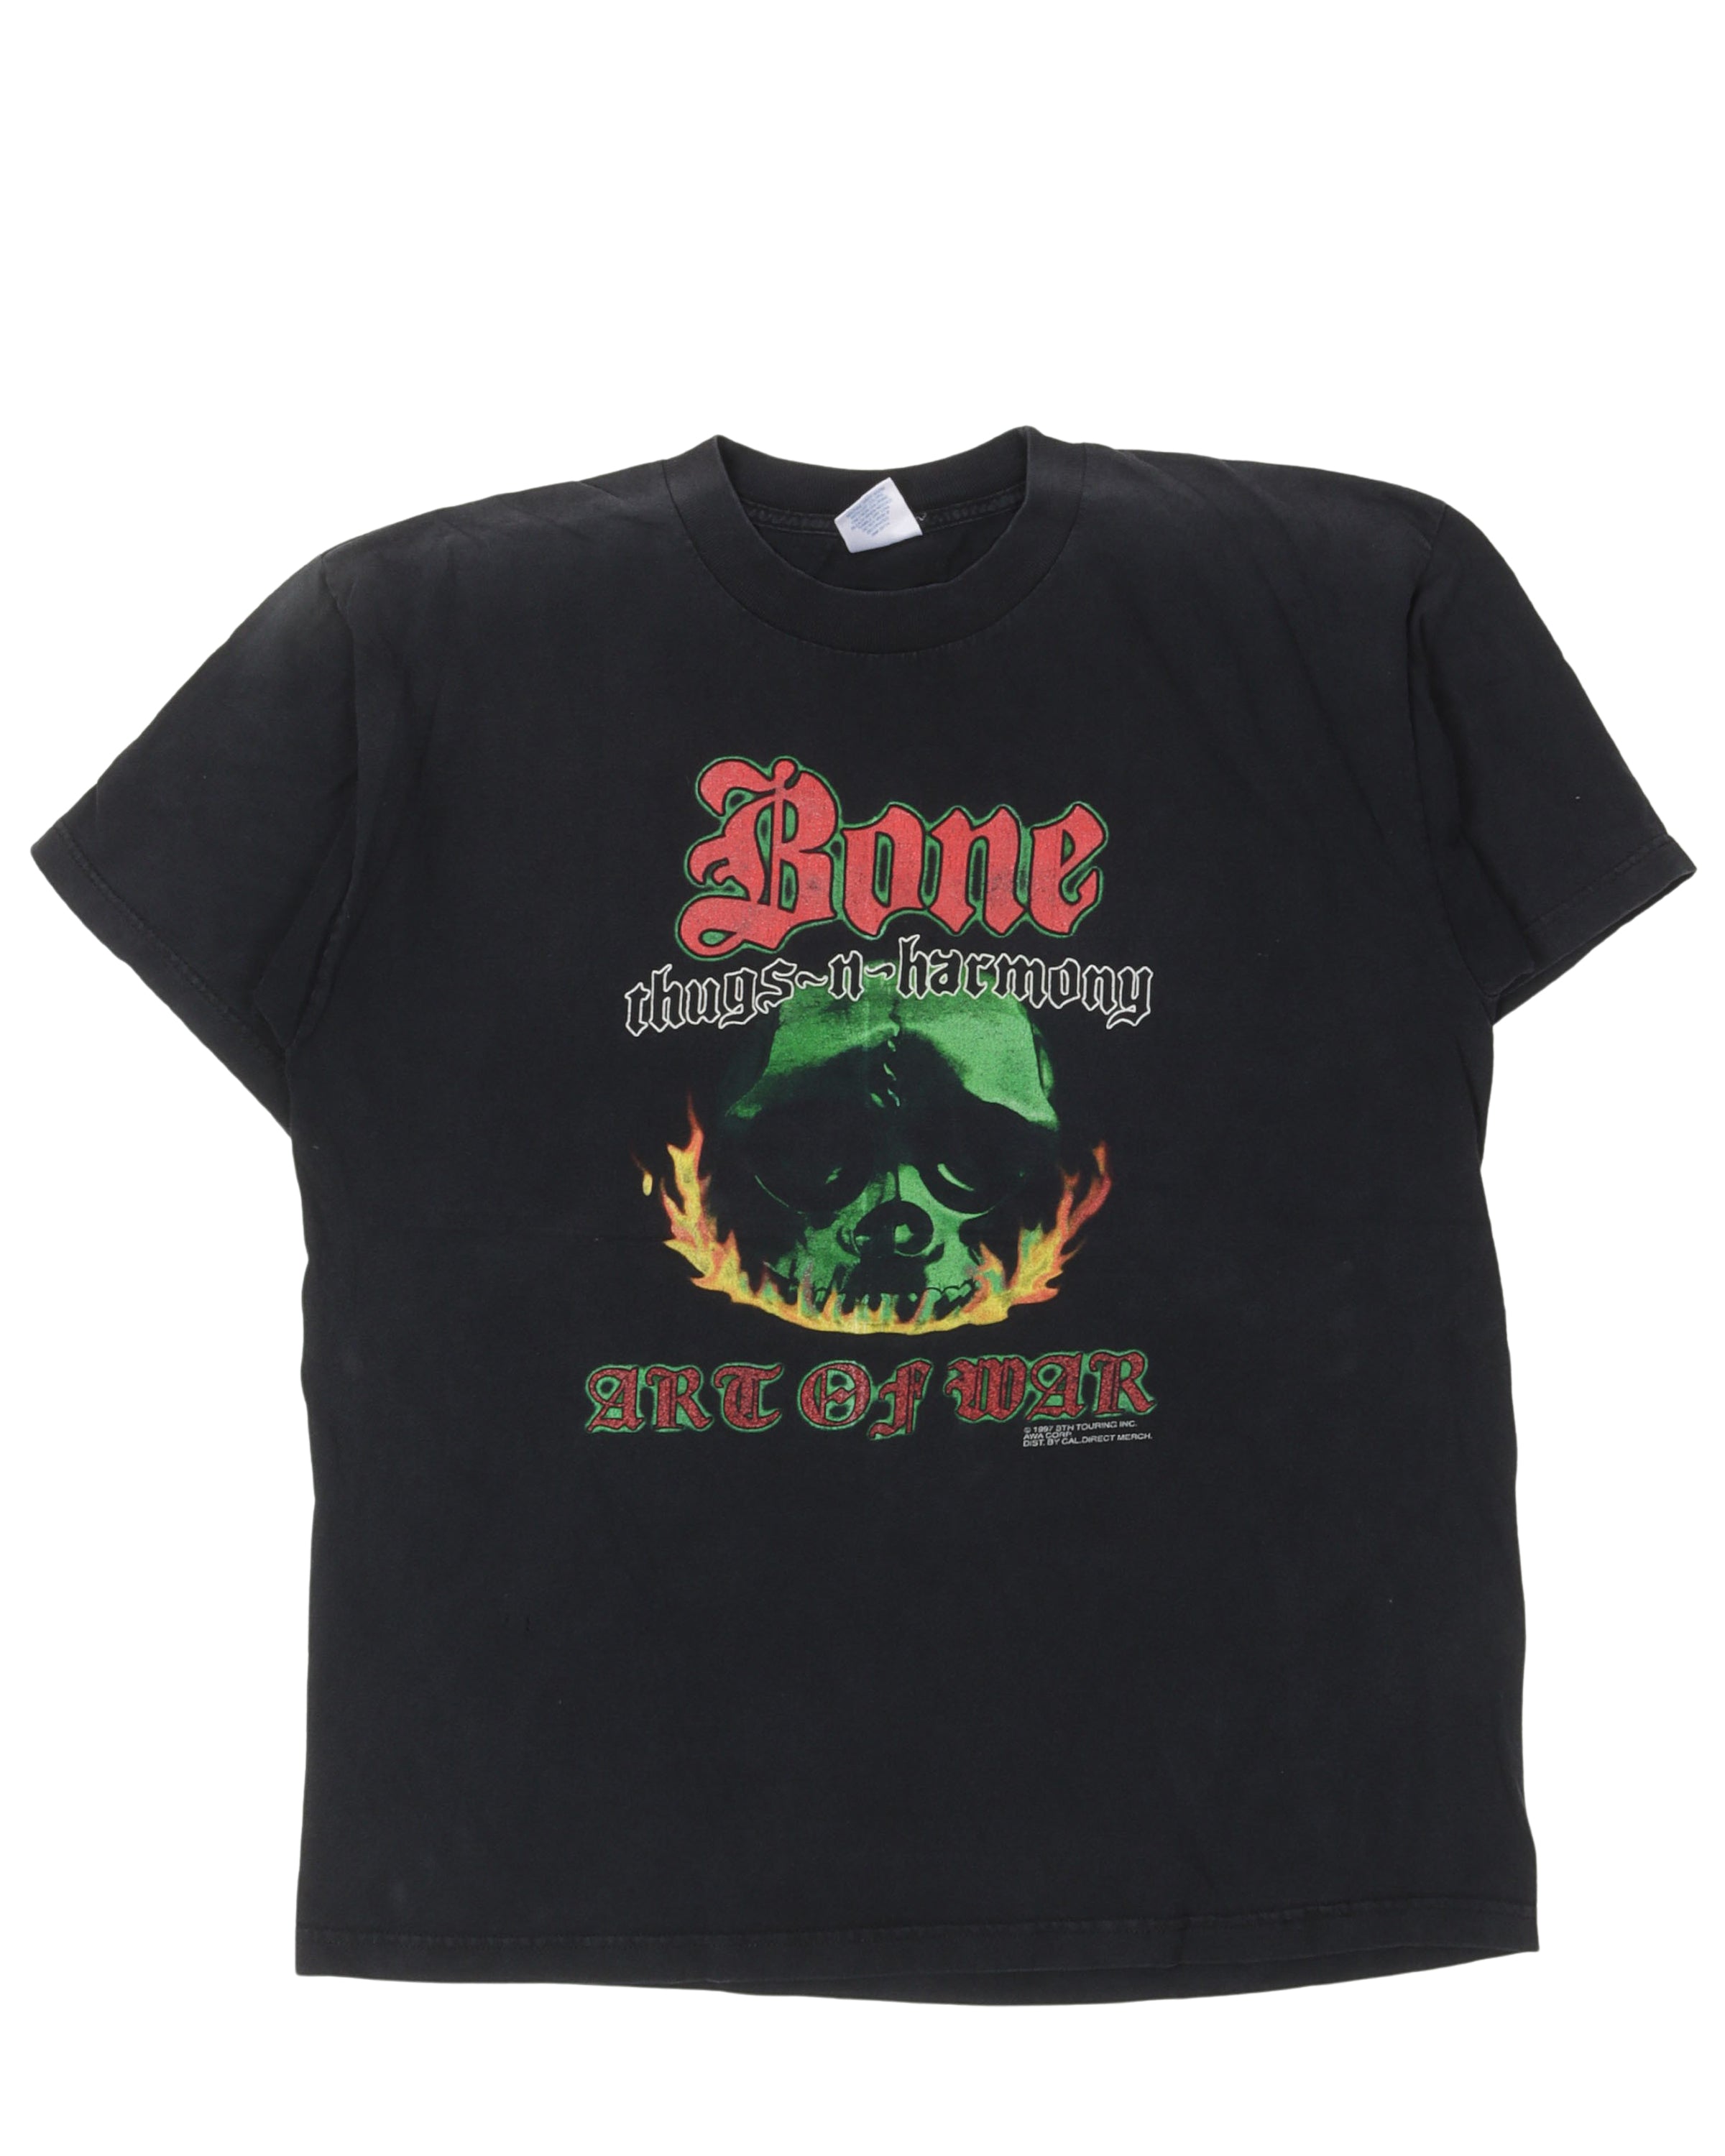 Bone Thugs N' Harmony Art of War T-Shirt